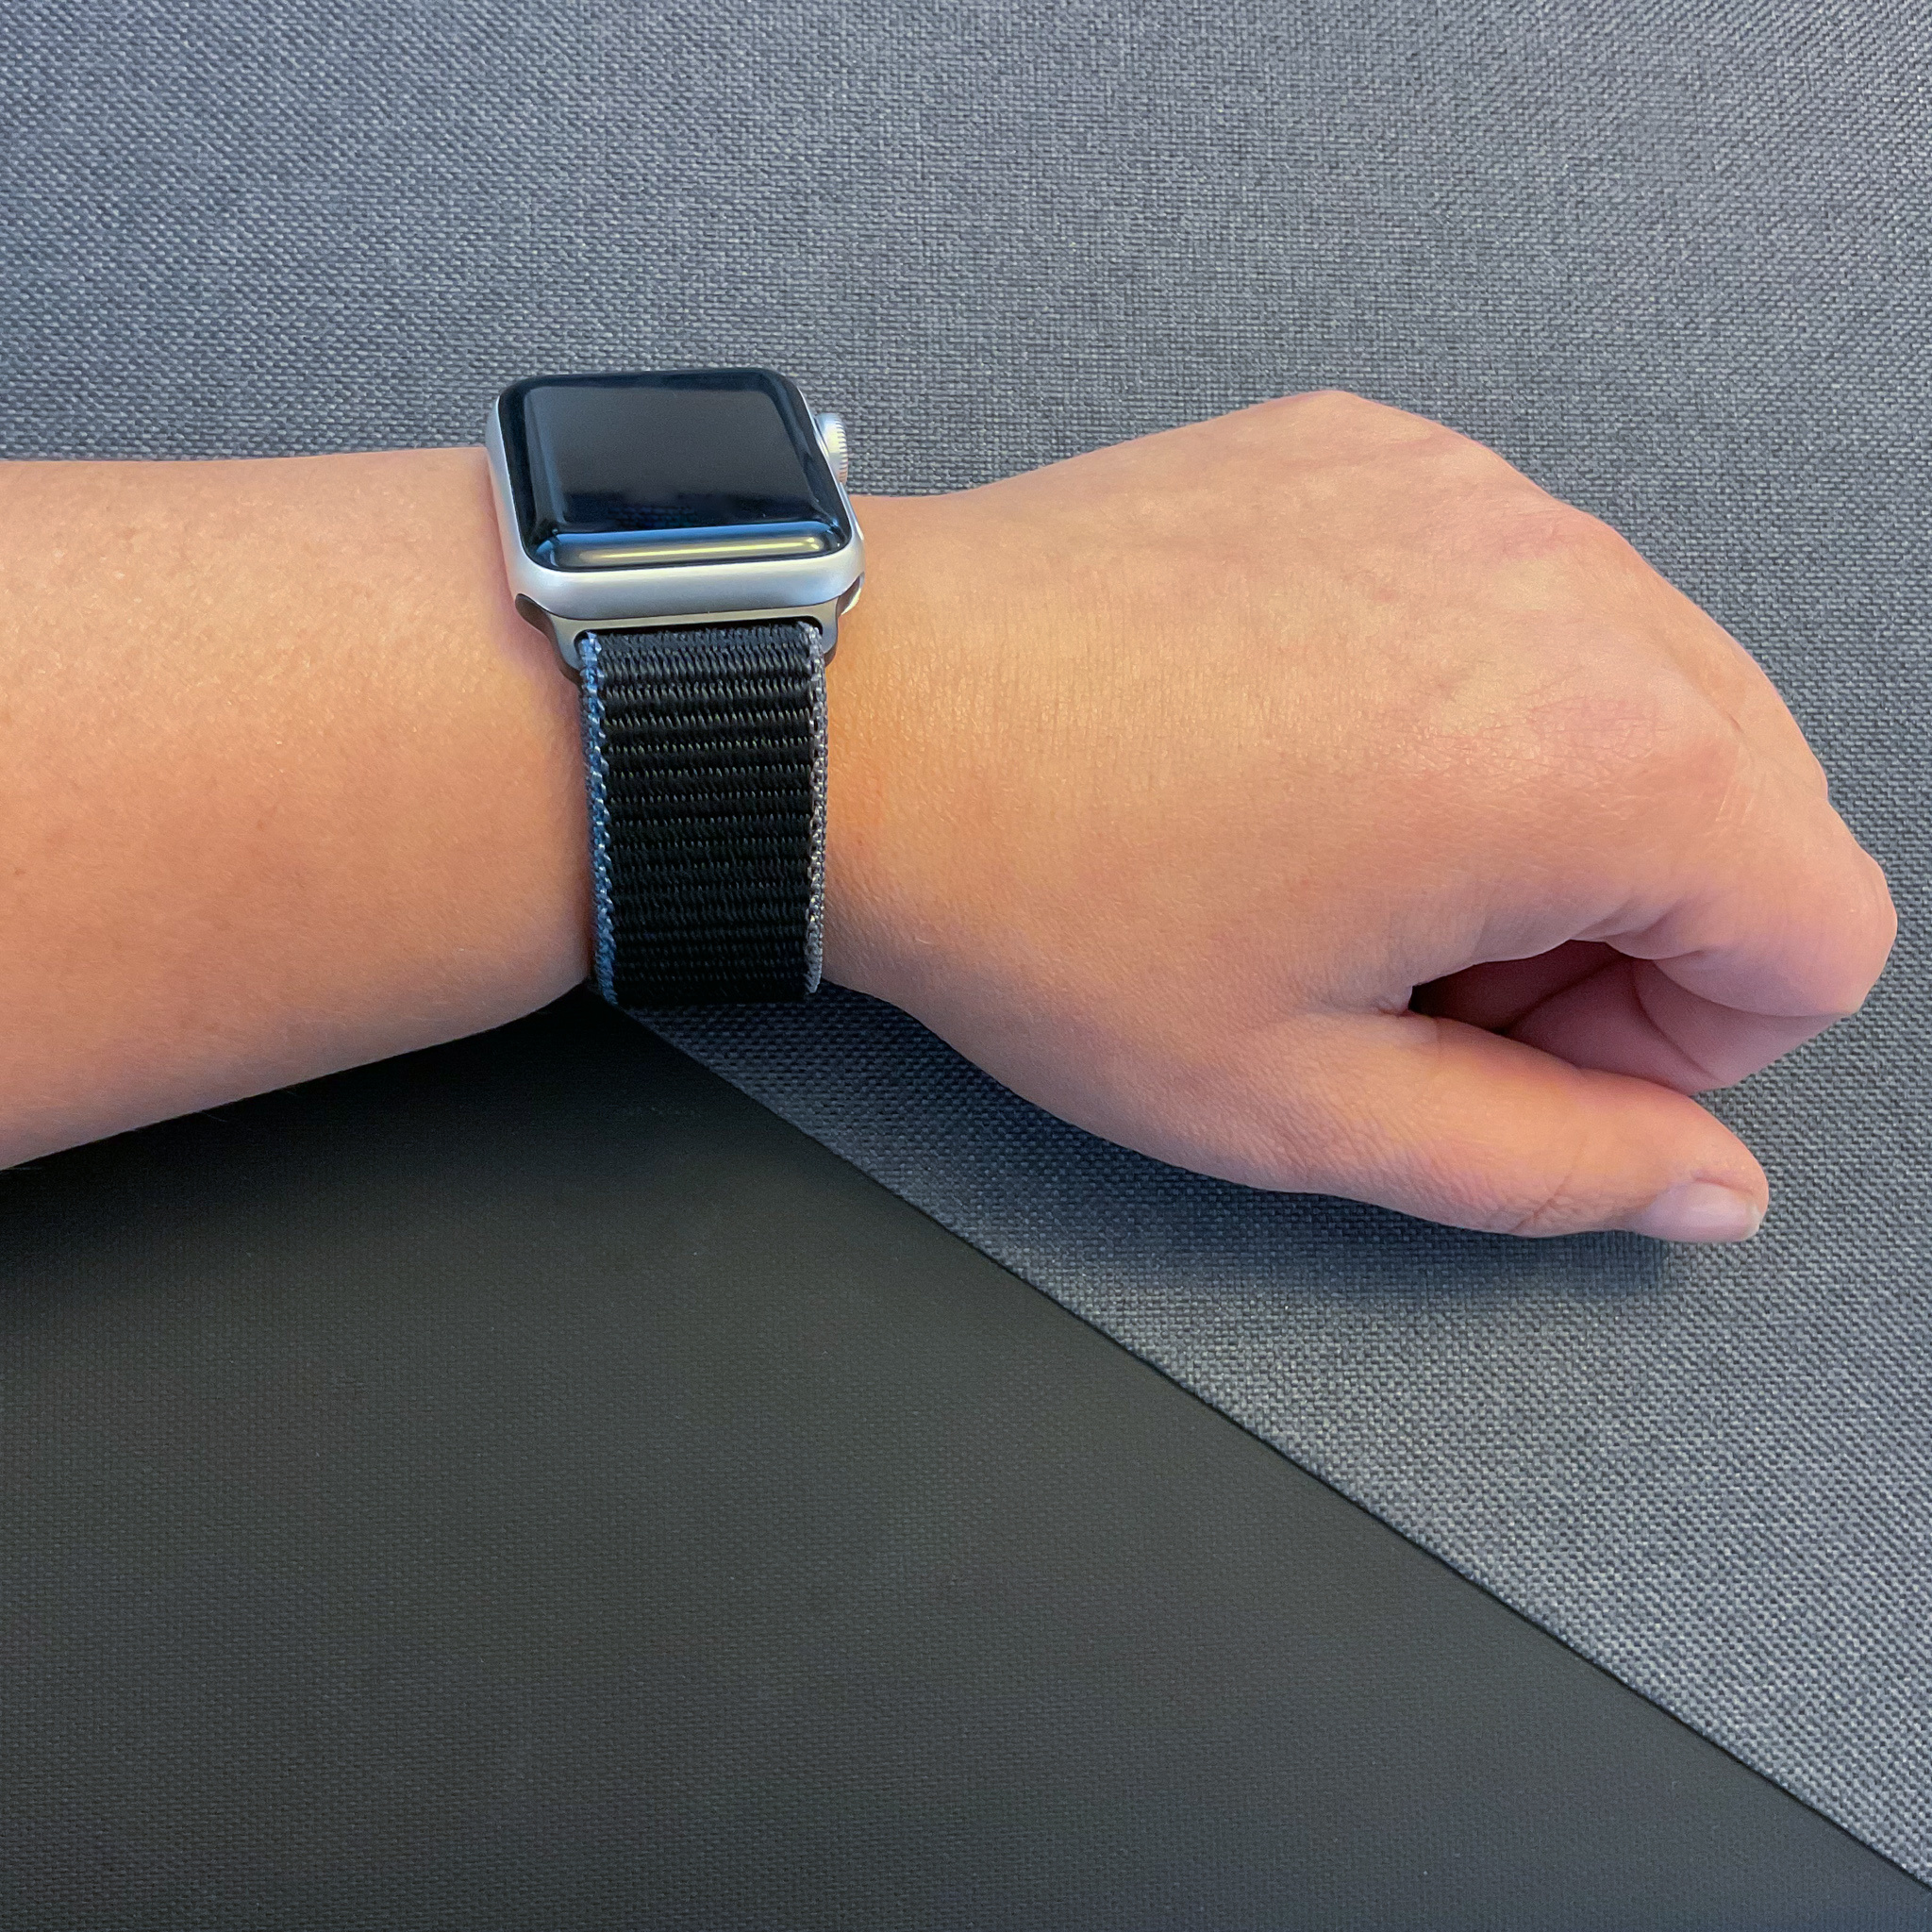 Cinturino nylon sport loop per Apple Watch - carbone